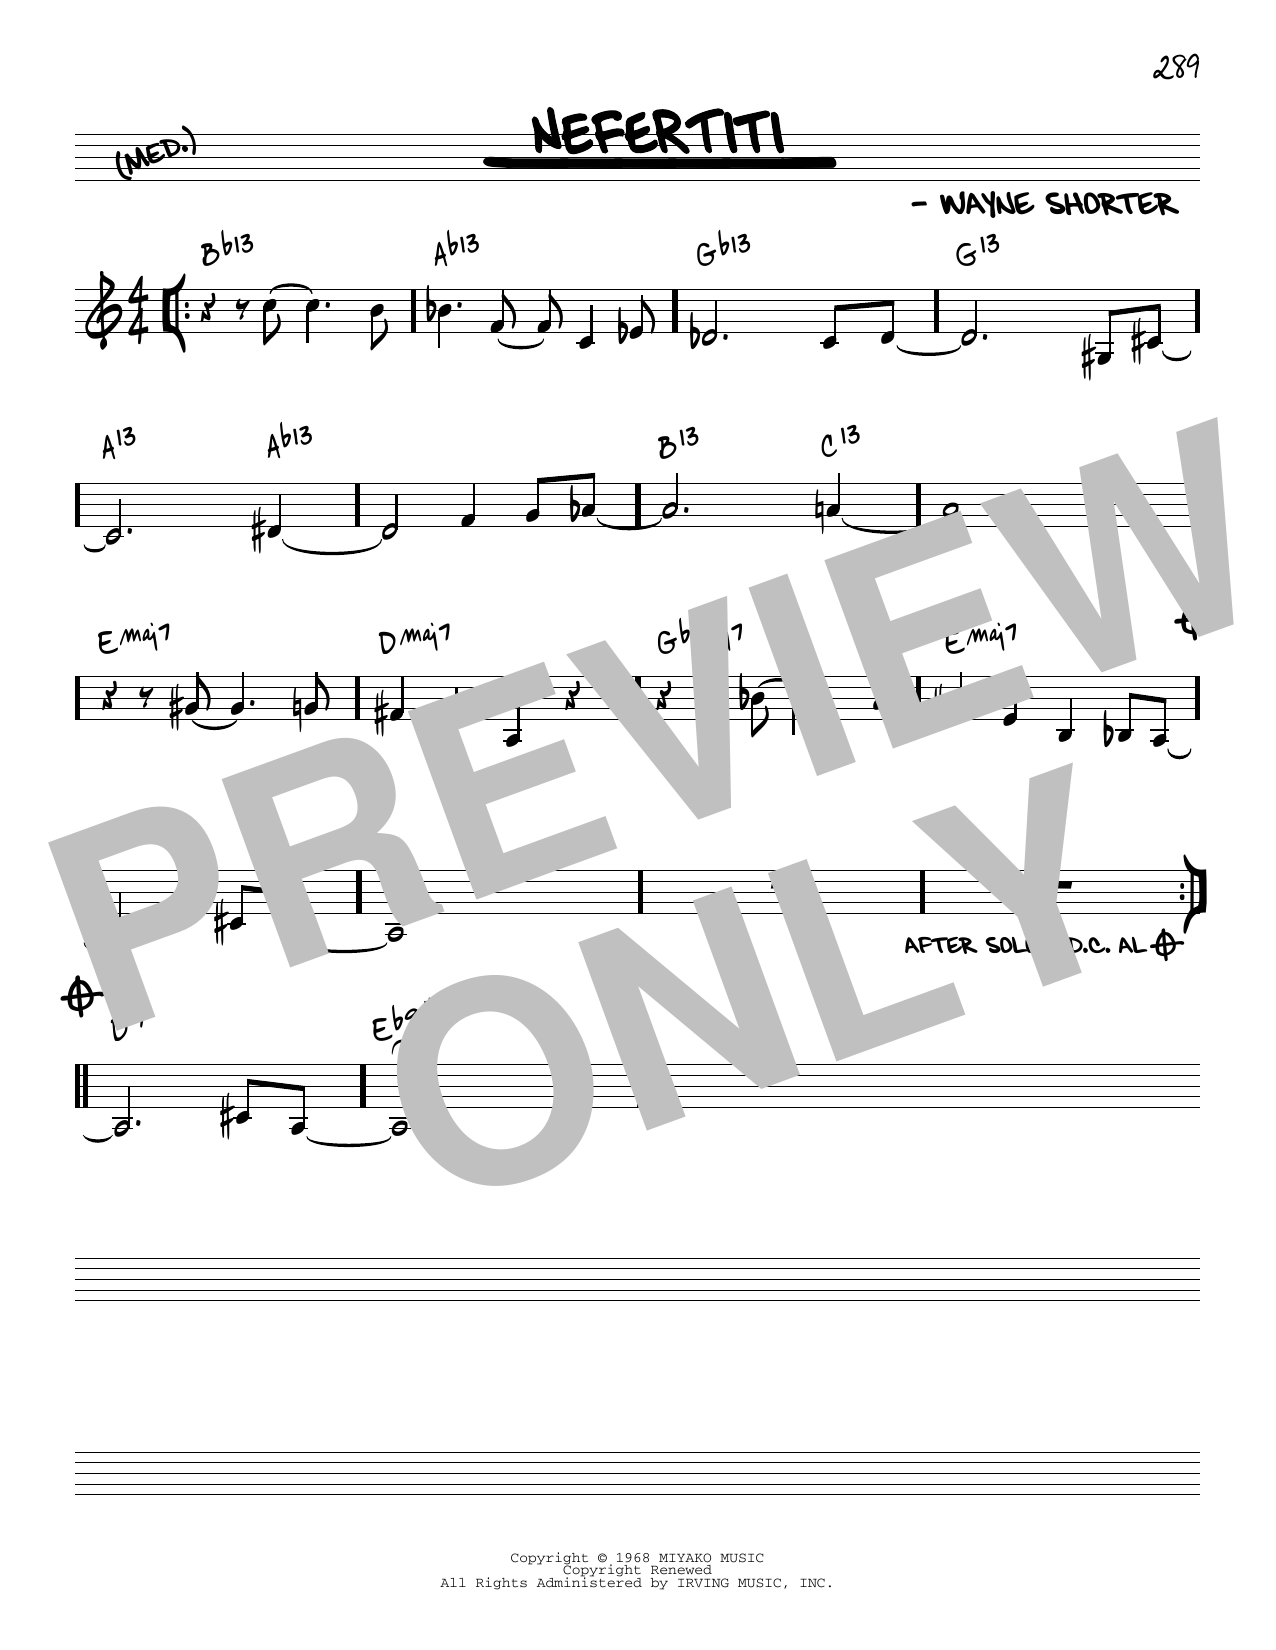 Download Wayne Shorter Nefertiti [Reharmonized version] (arr. Sheet Music